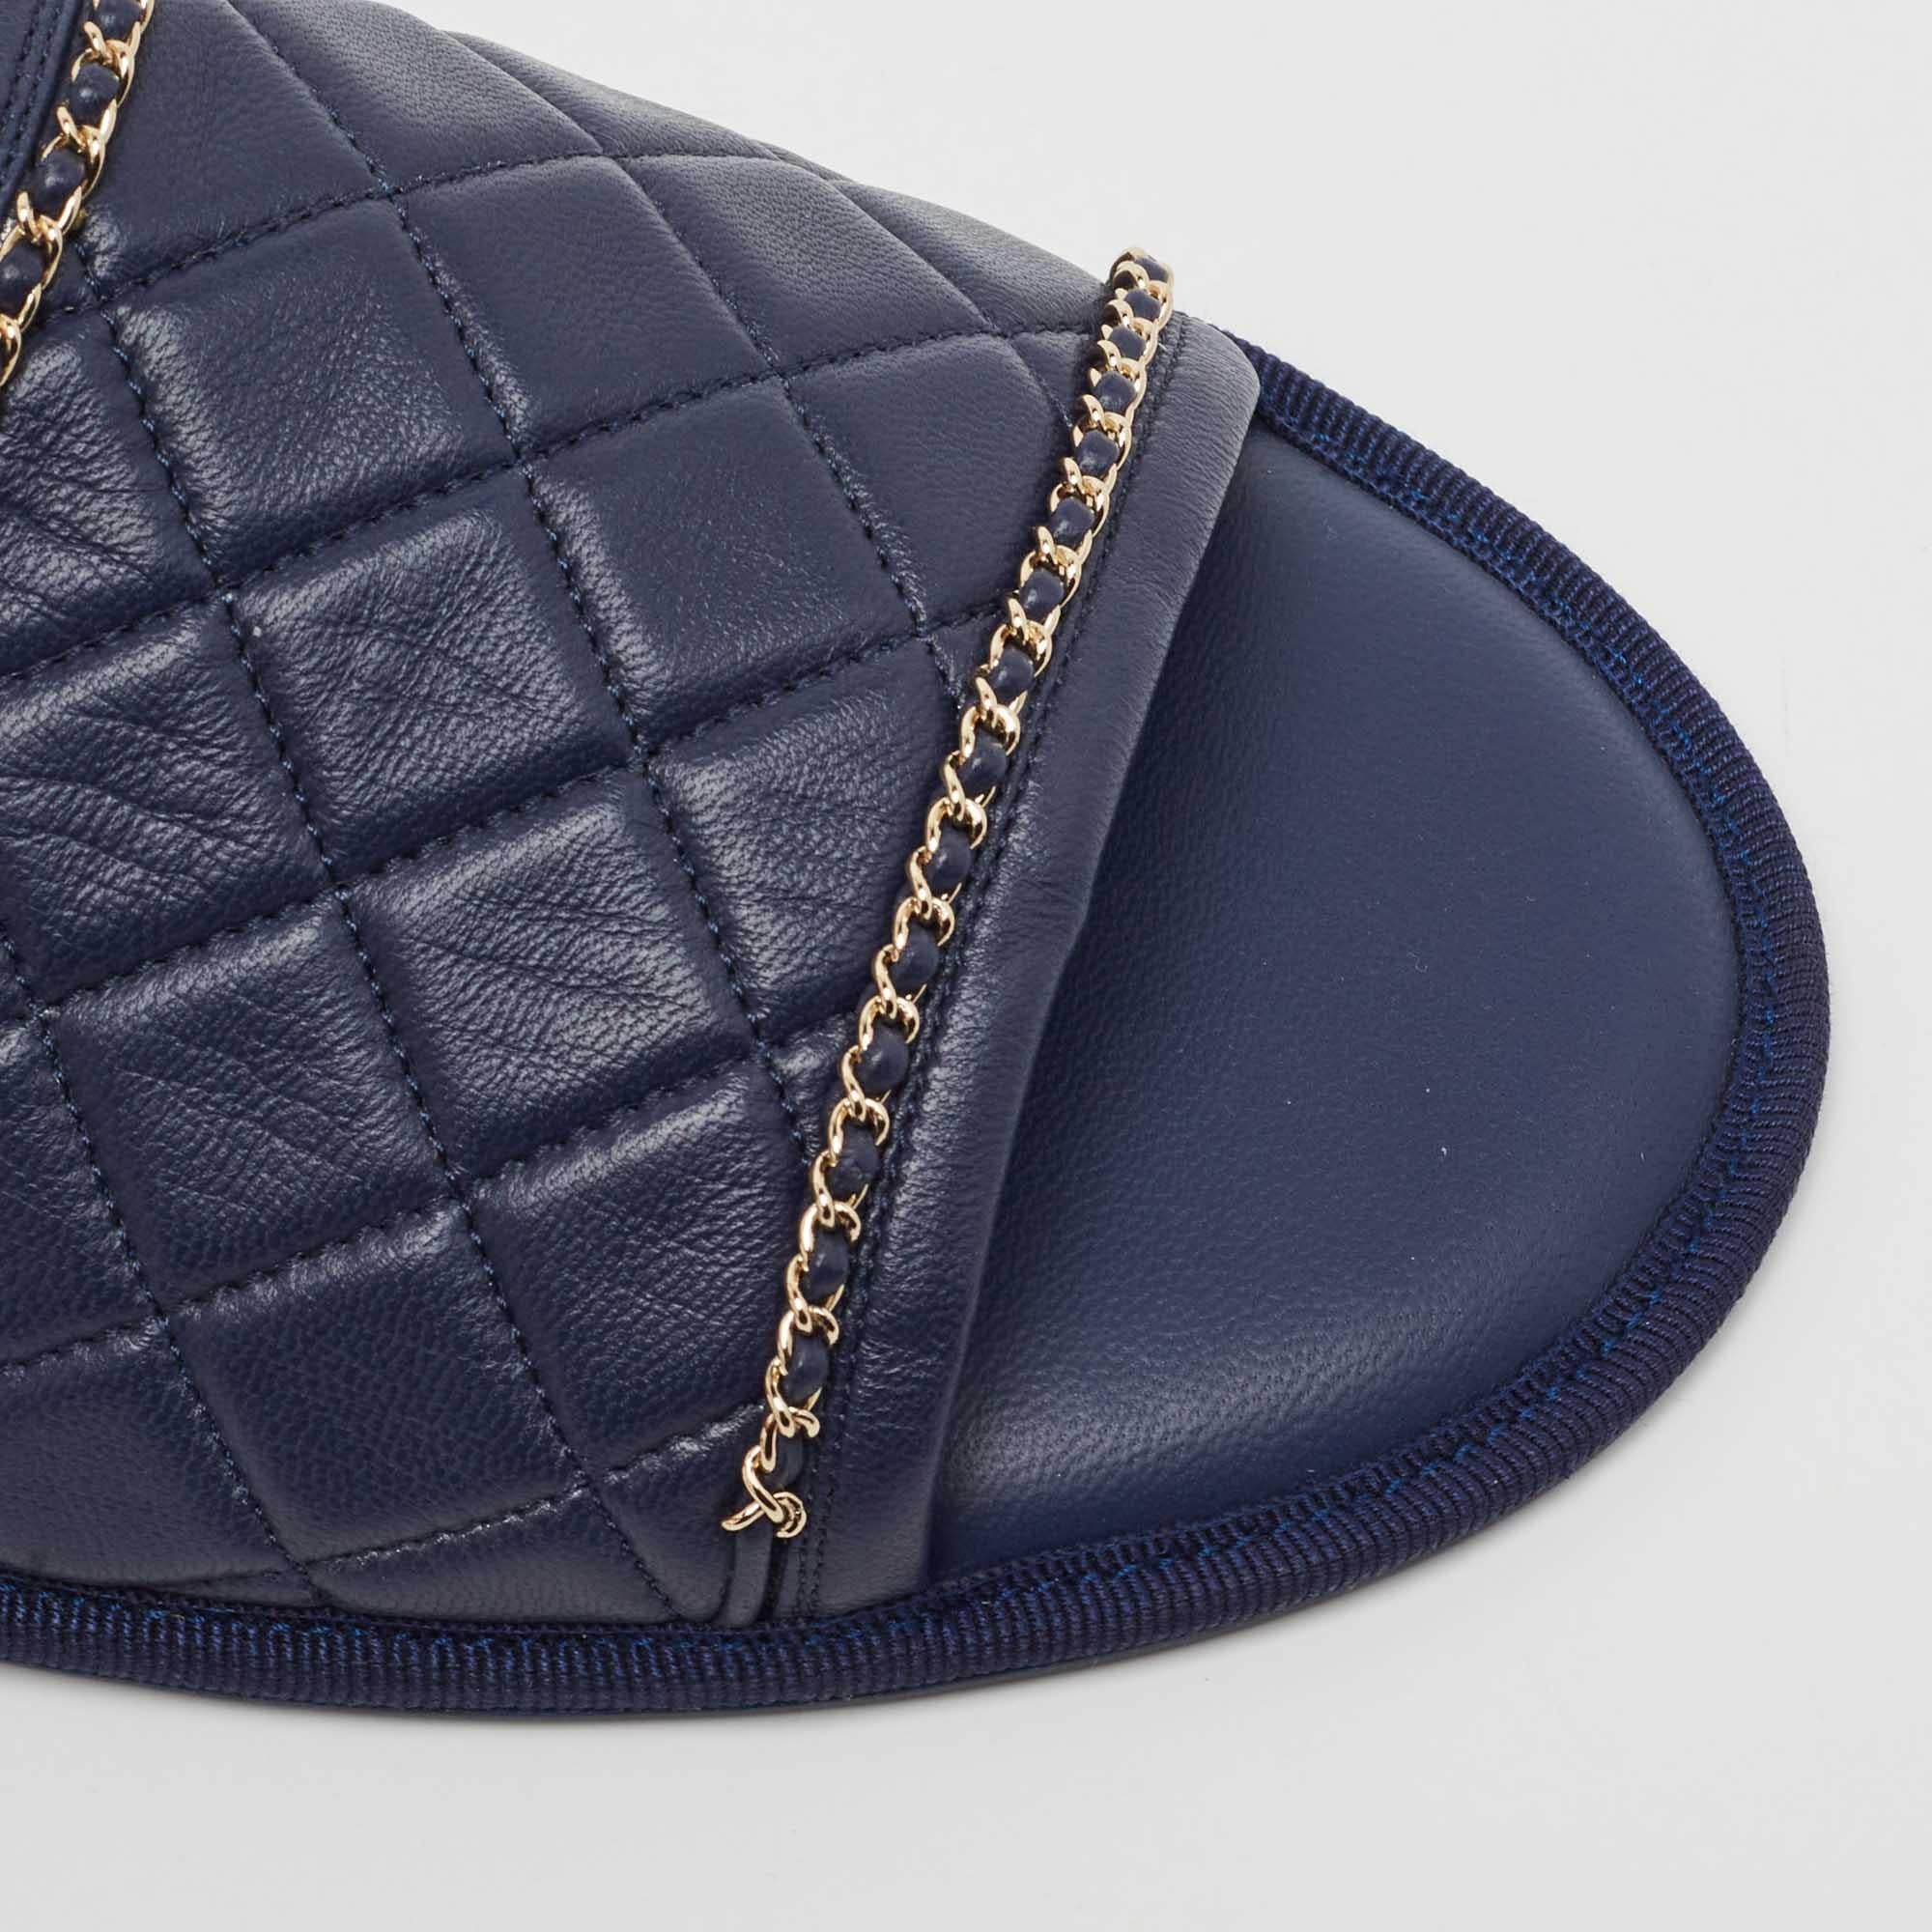 Women's Chanel Navy Blue Leather Chain Link CC Flat Slides Size L